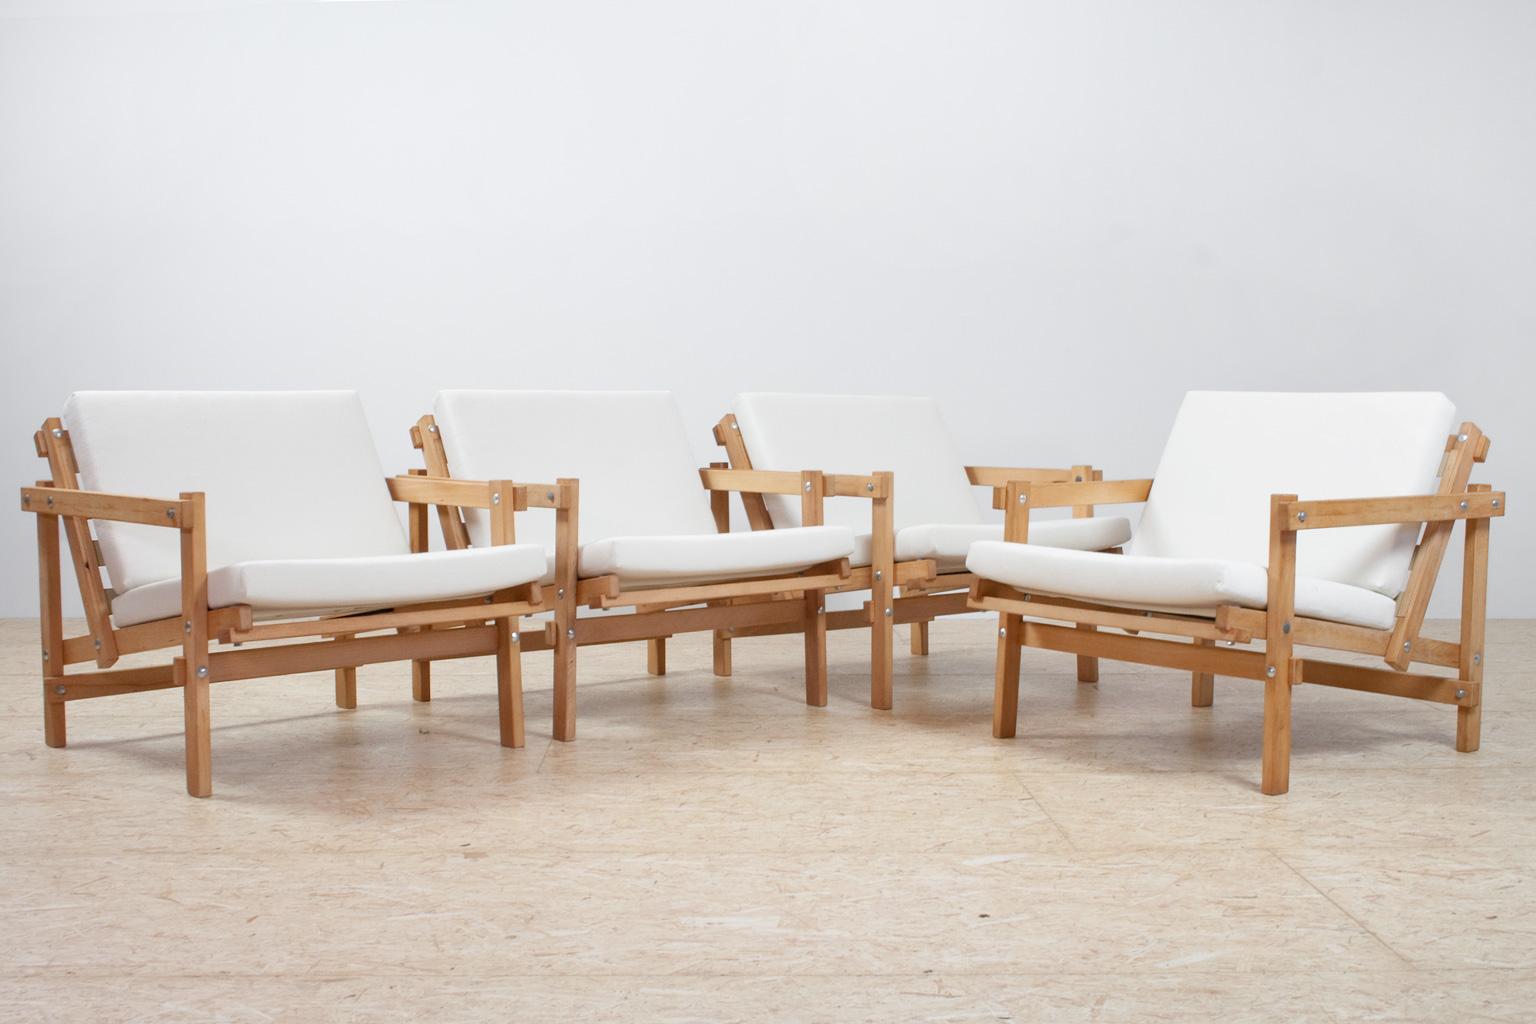 Minimalist Bauhaus inspired set of 4 Lounge Chairs in Beech by Martin Visser 1974-1986